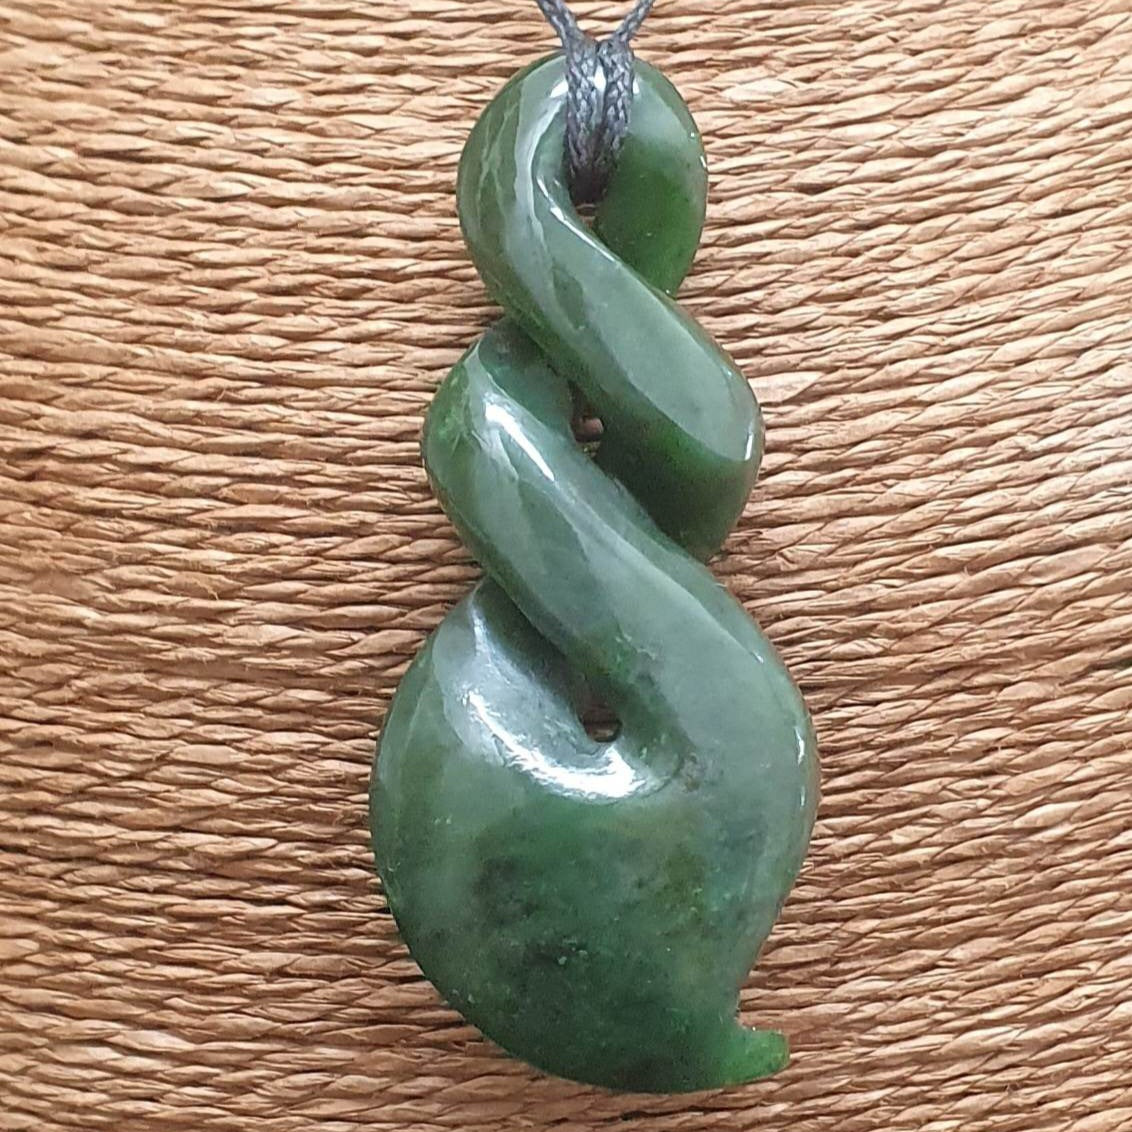 40mm Genuine Canadian Jade Maori-Inspired Koru Pendant